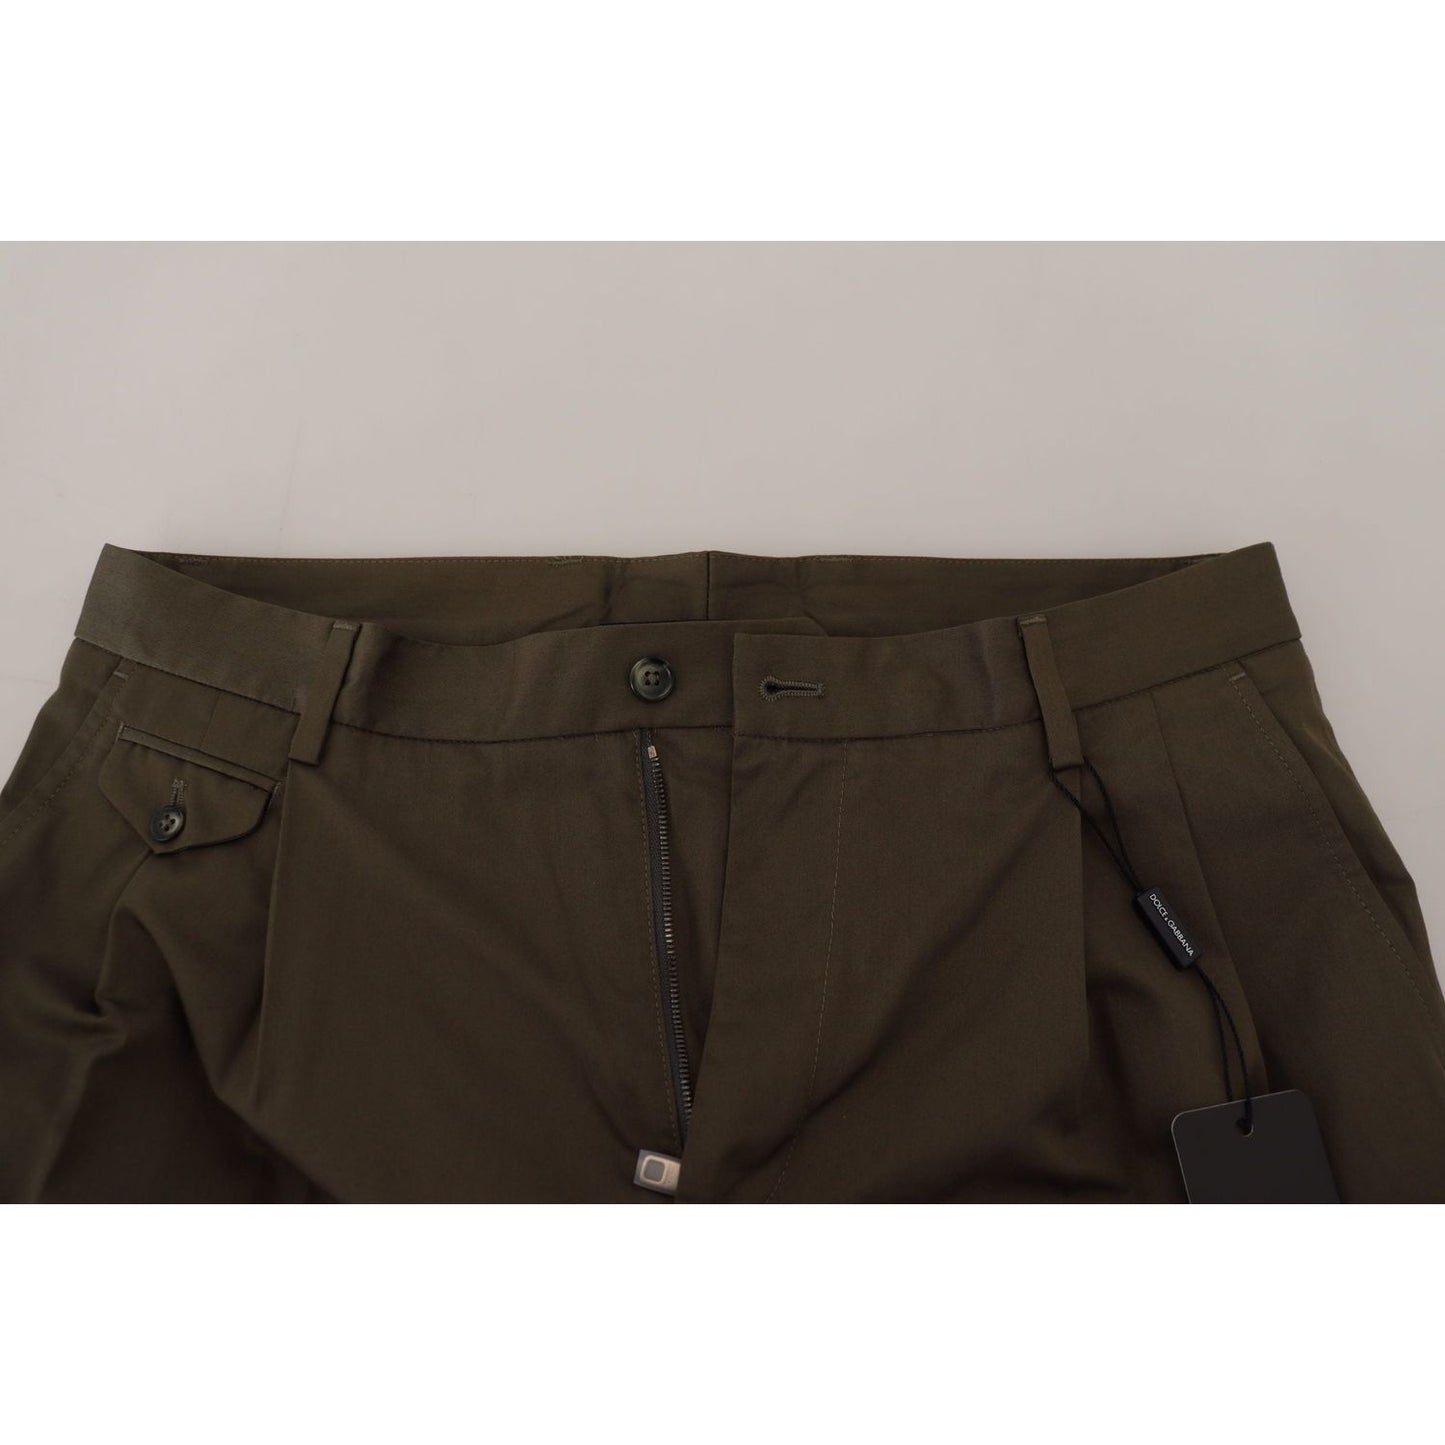 Dolce & Gabbana Elegant Green Cotton Chino Shorts Shorts green-chinos-cotton-casual-shorts